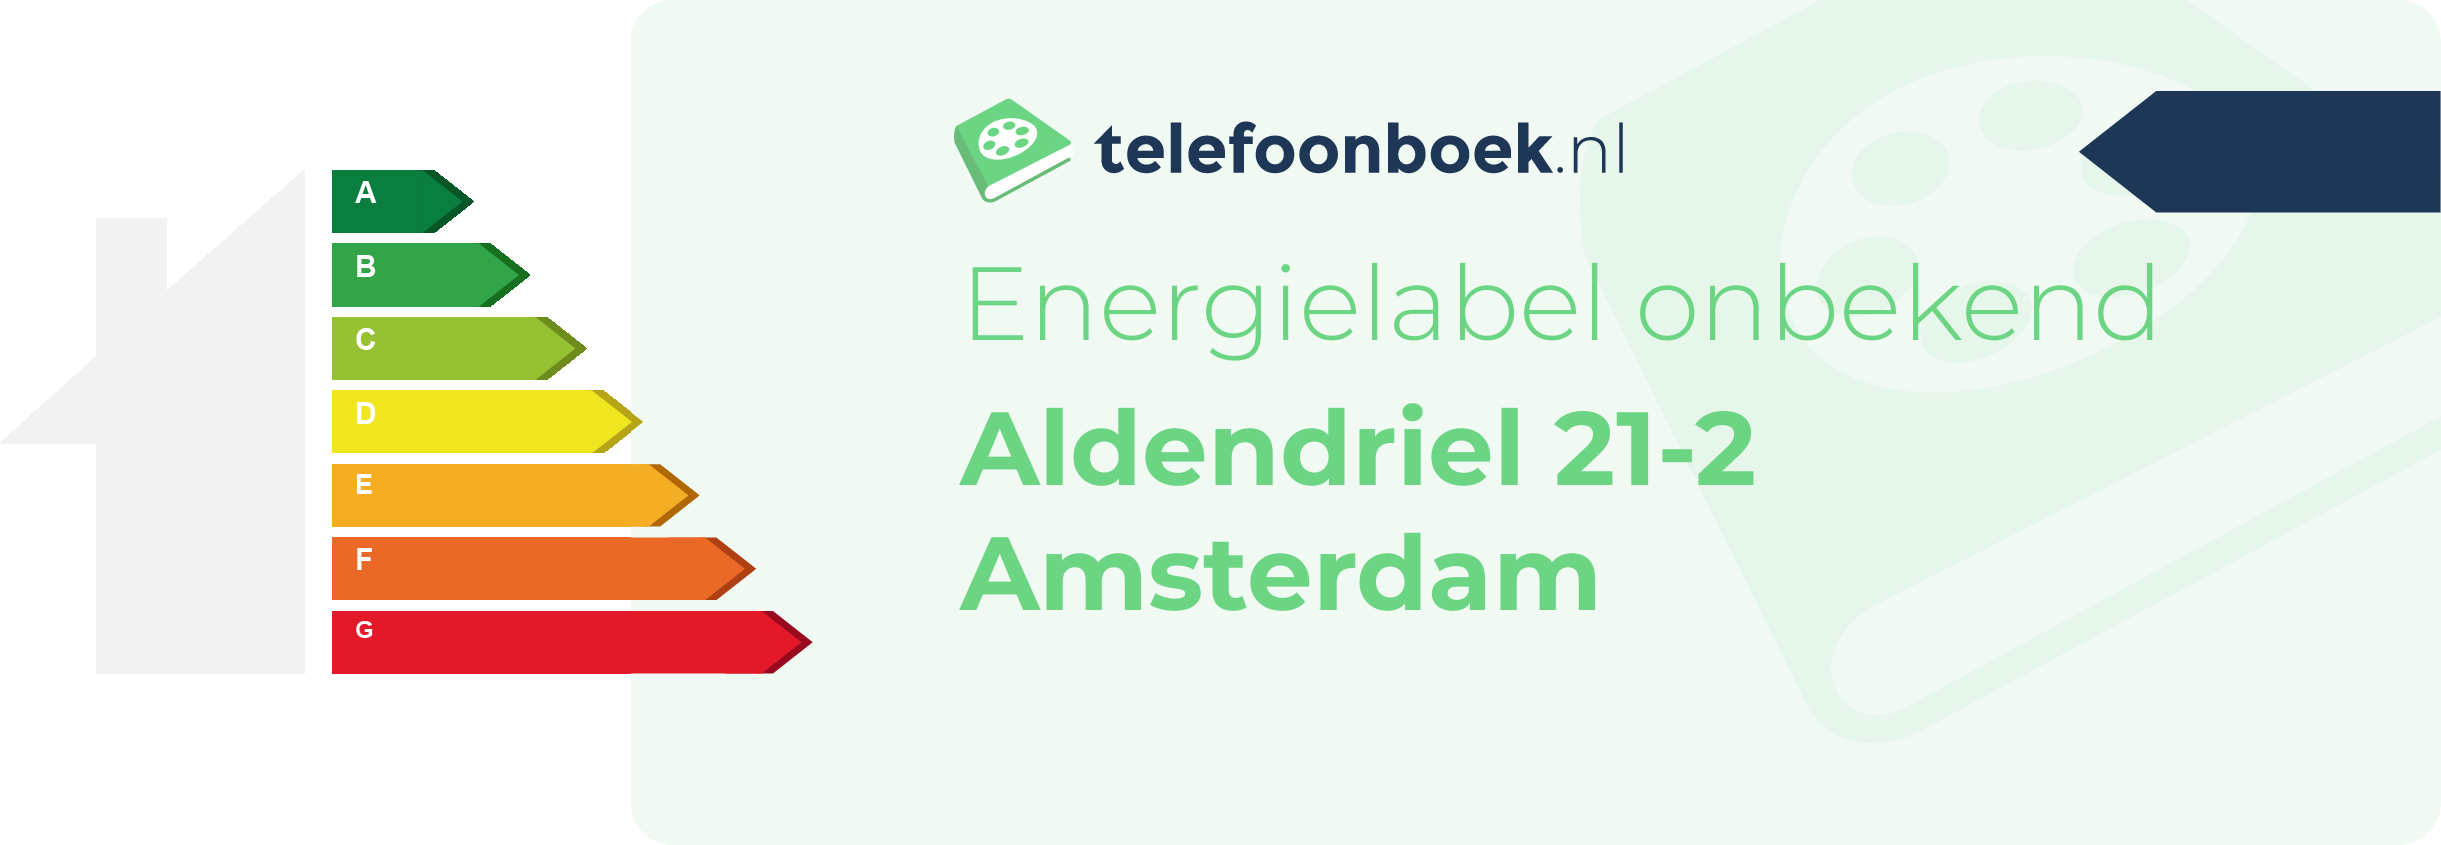 Energielabel Aldendriel 21-2 Amsterdam